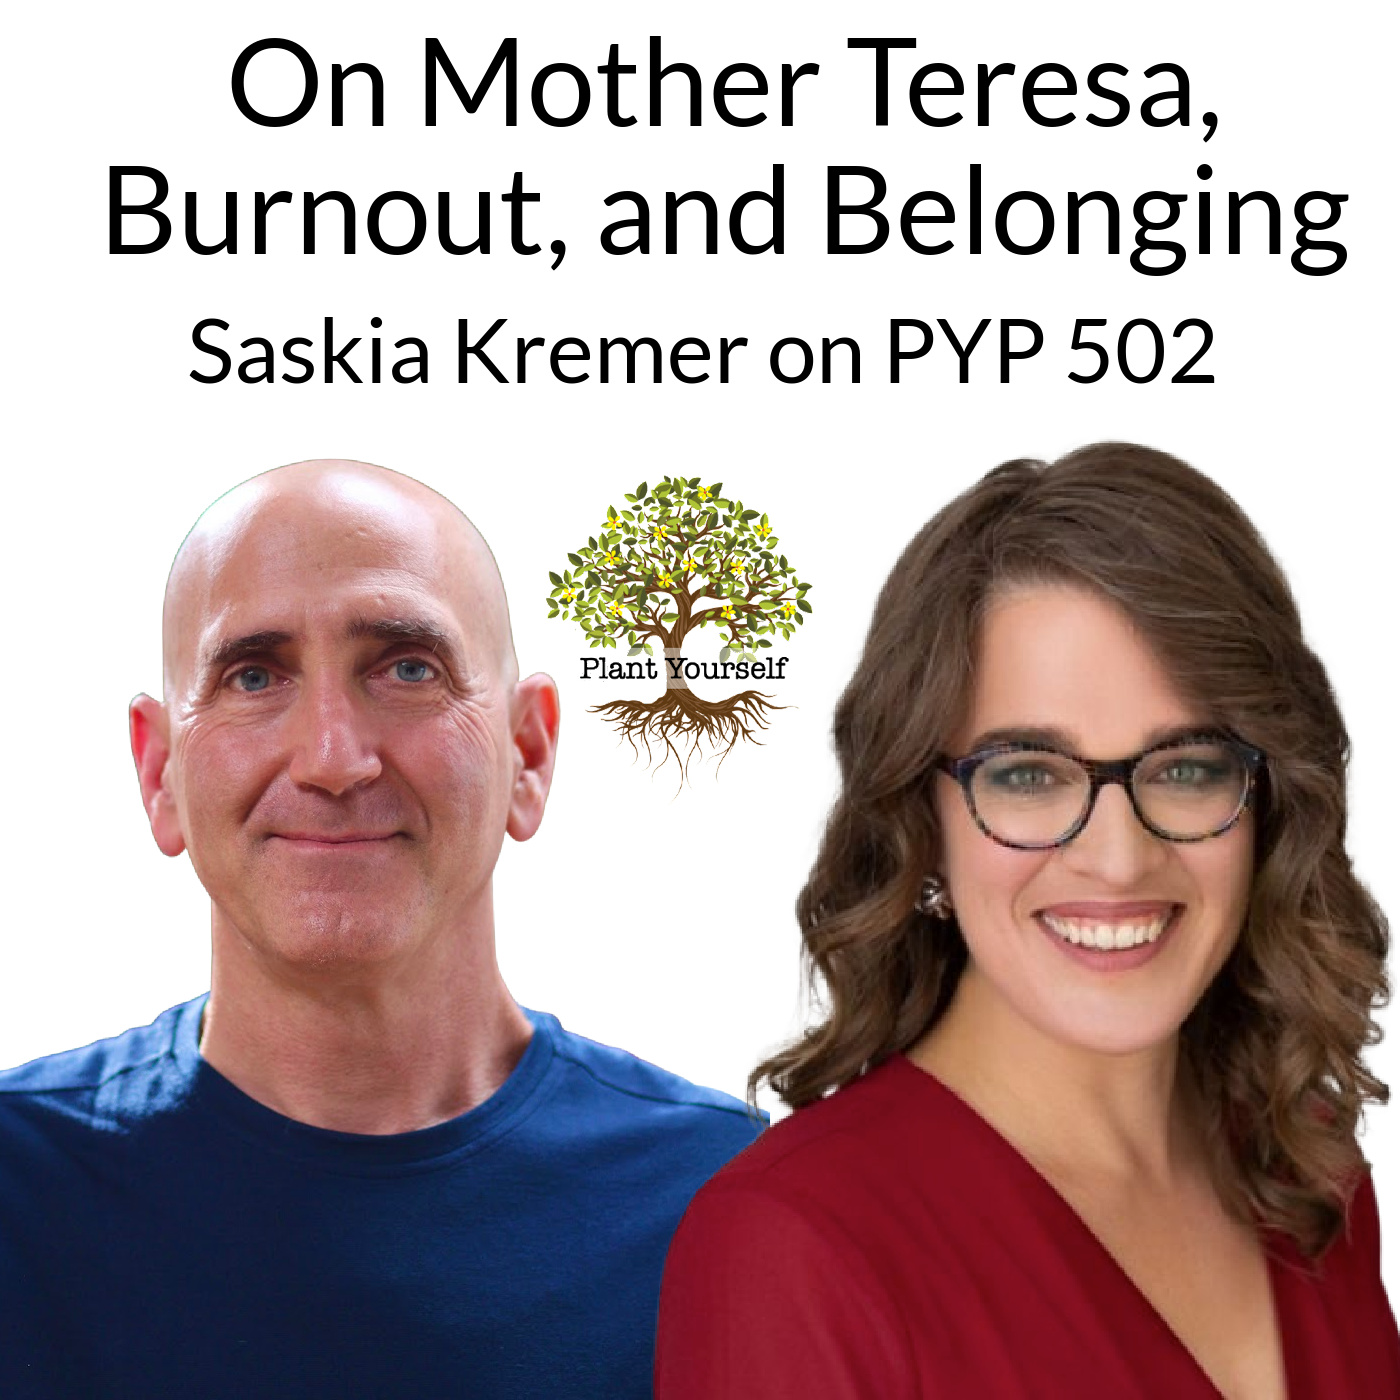 On Mother Teresa, Burnout, and Belonging: Saskia Kremer on PYP 502